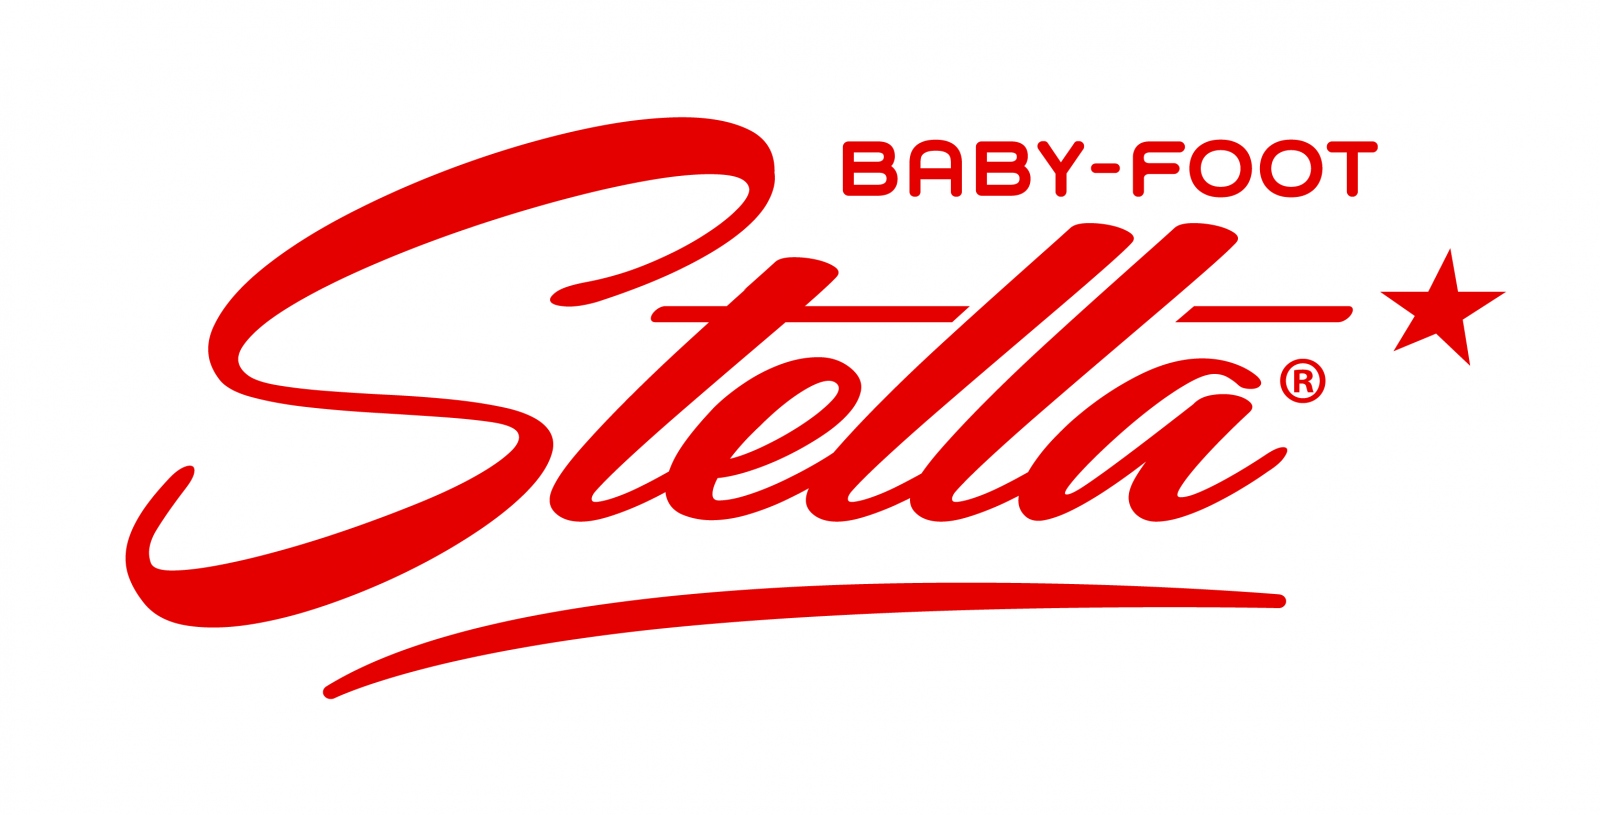 pics/Stella/option/stella-tablefootball-logo.jpg